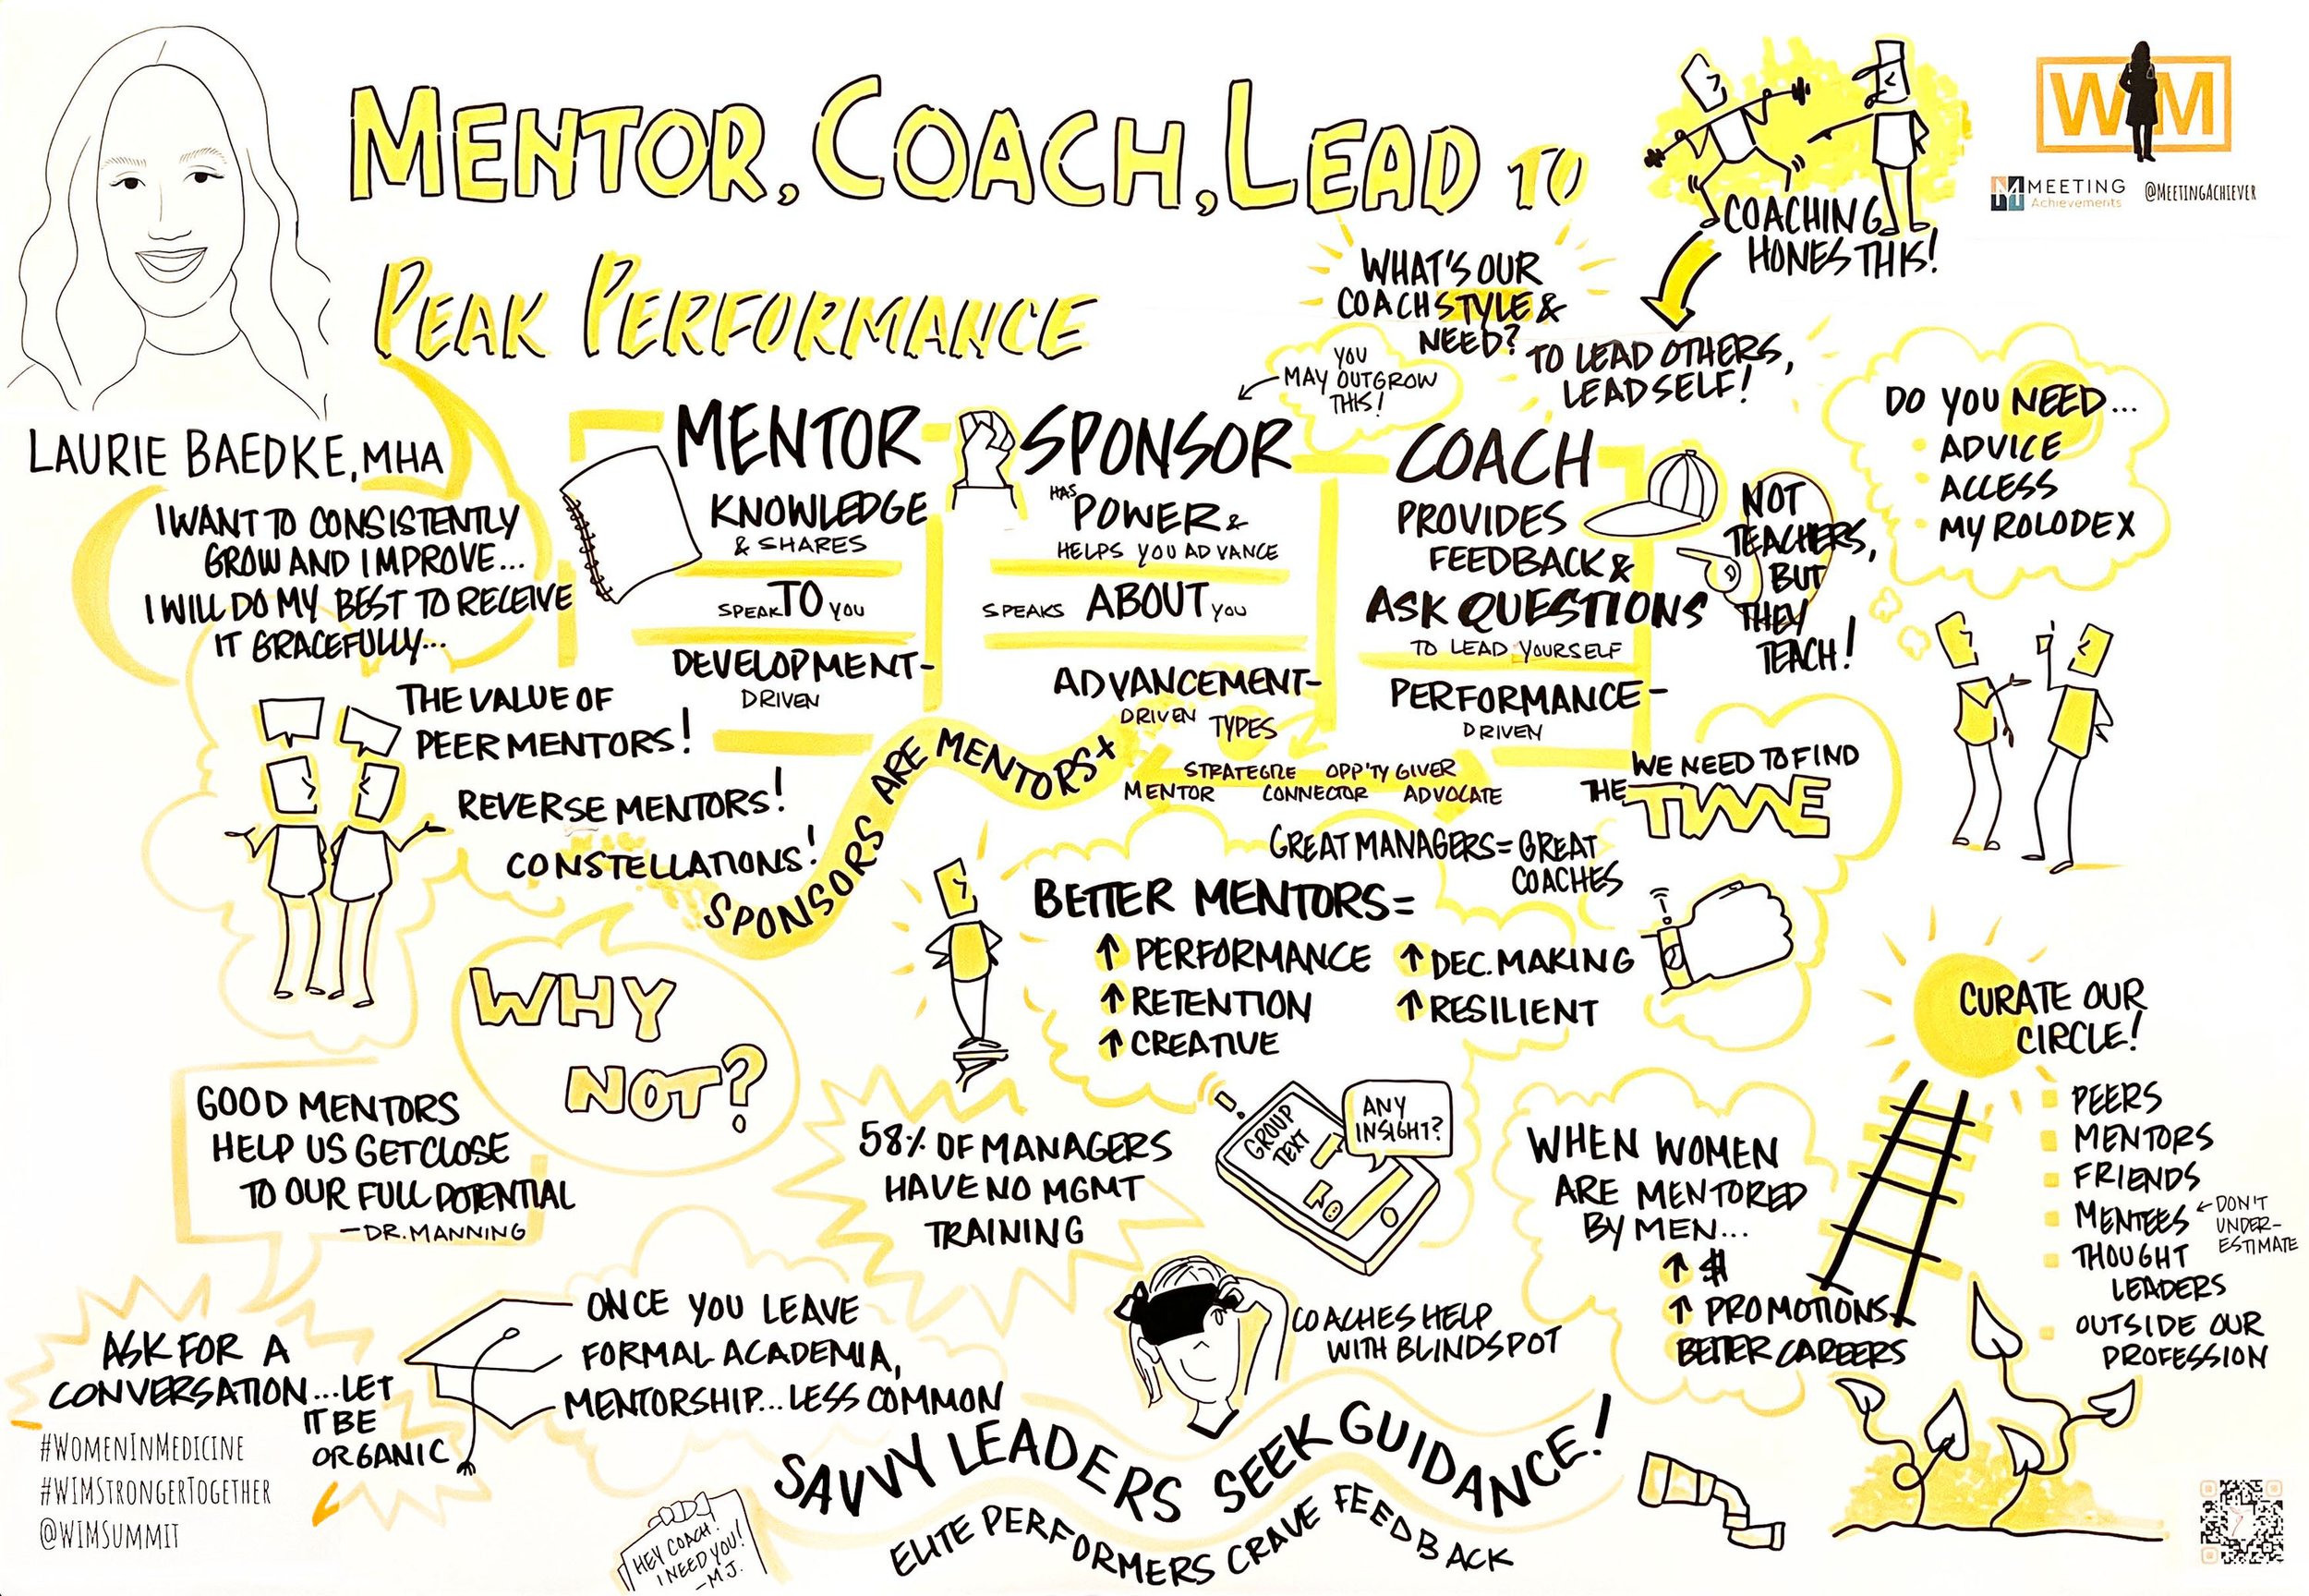 17_Meeting Achievements_WiM 2022_Mentor Coach Lead to Peak Performance_20220917.jpeg